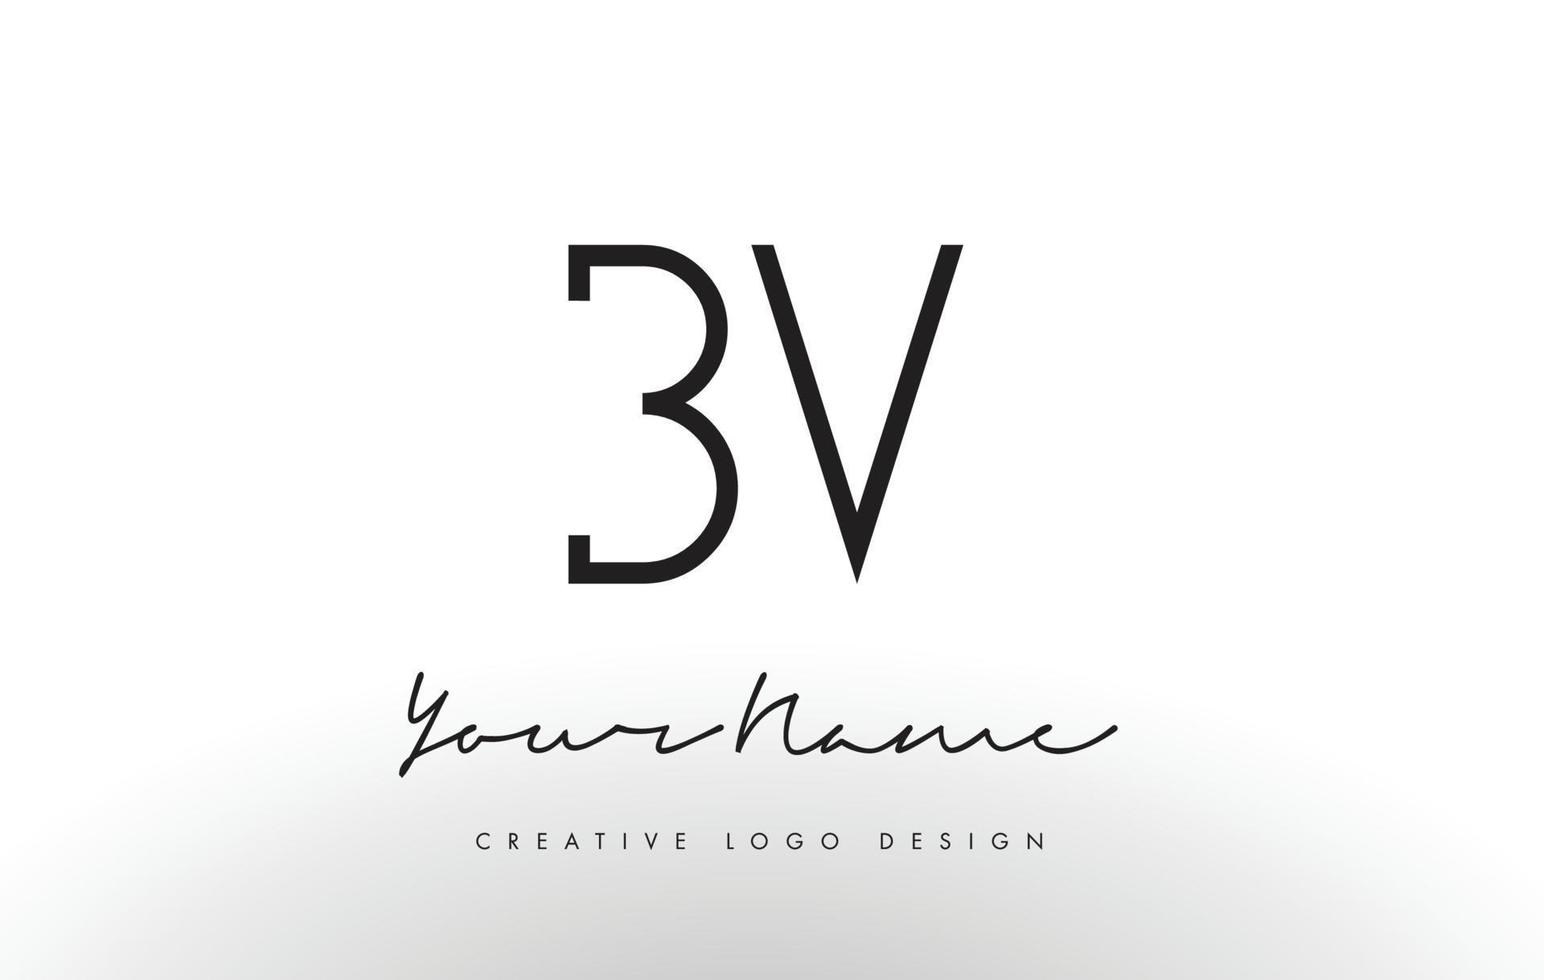 Diseño de logotipo de letras bv delgado. concepto creativo simple letra negra. vector